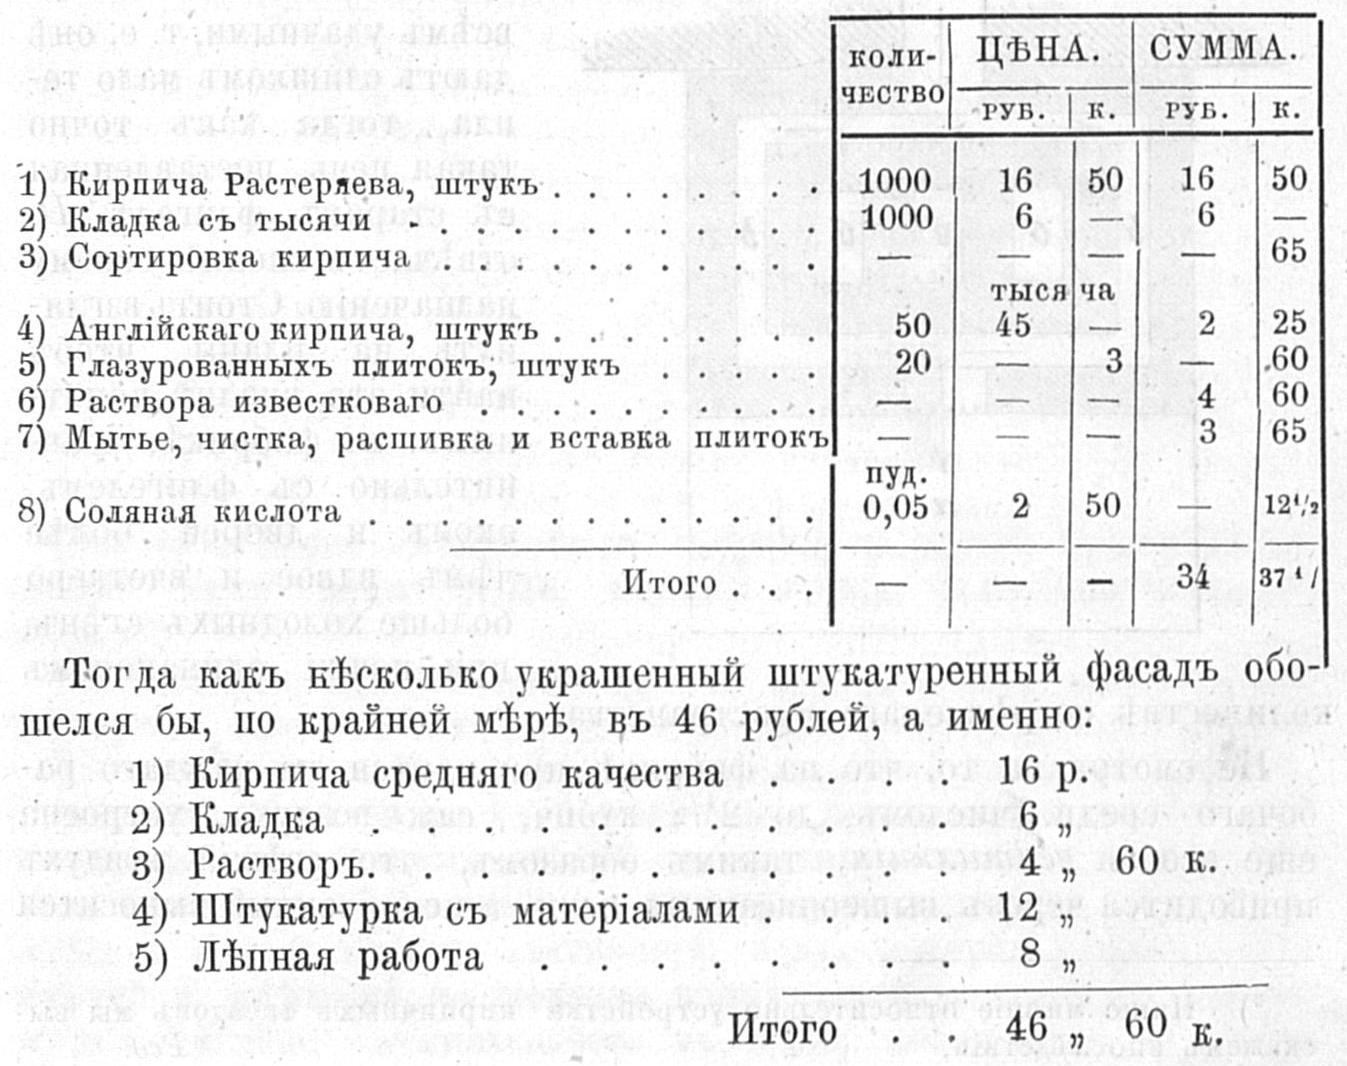 Квадратная сажень фасада обошлась в 34 рубля 37½ копеек